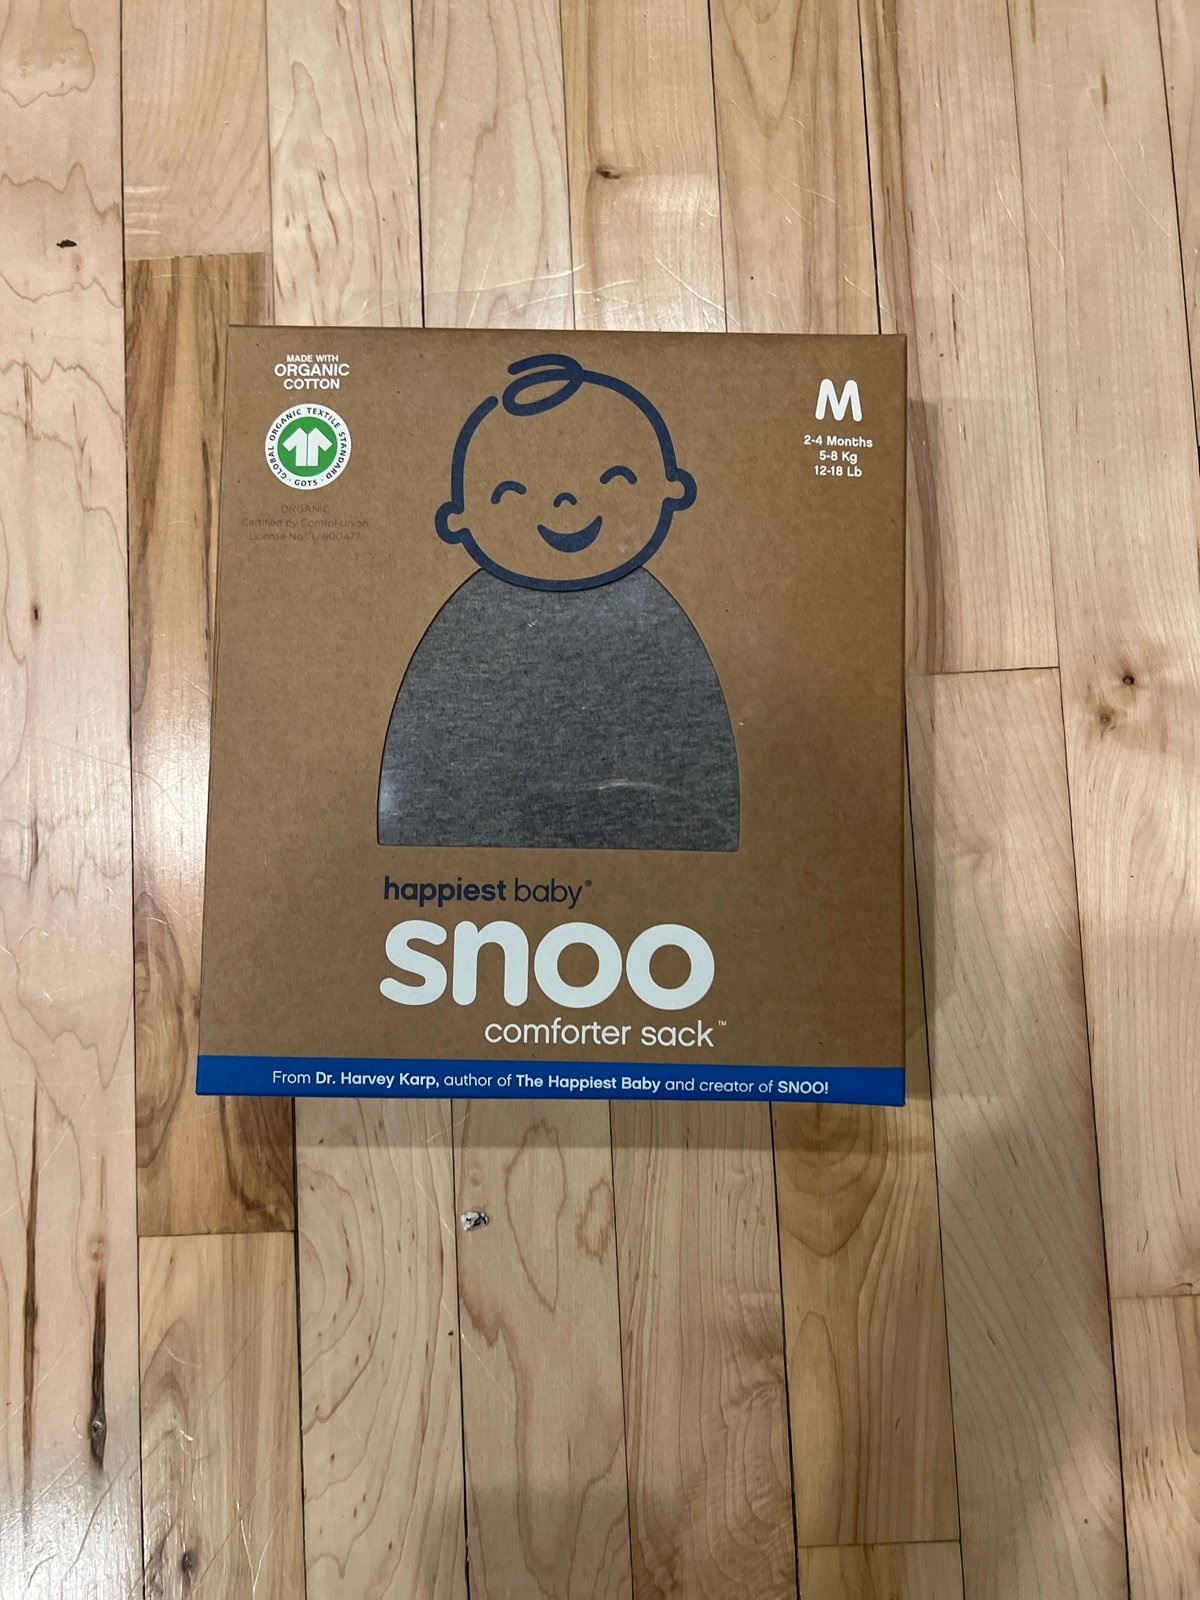 Happiest Baby Snoo comforter sack anr7auEf2